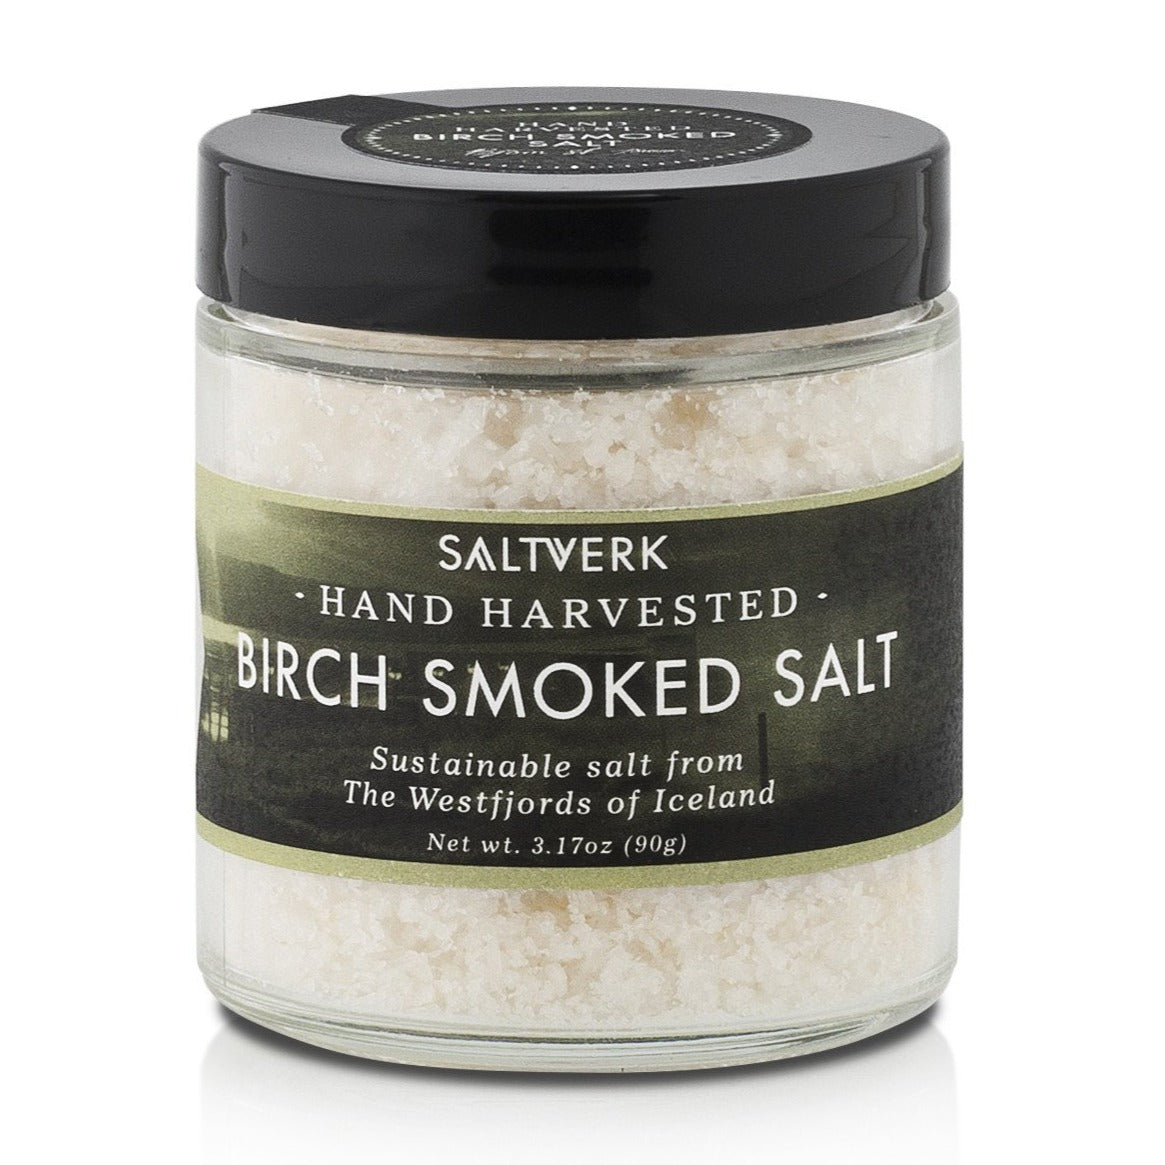 Salt- Birch Smoked Salt Saltverk